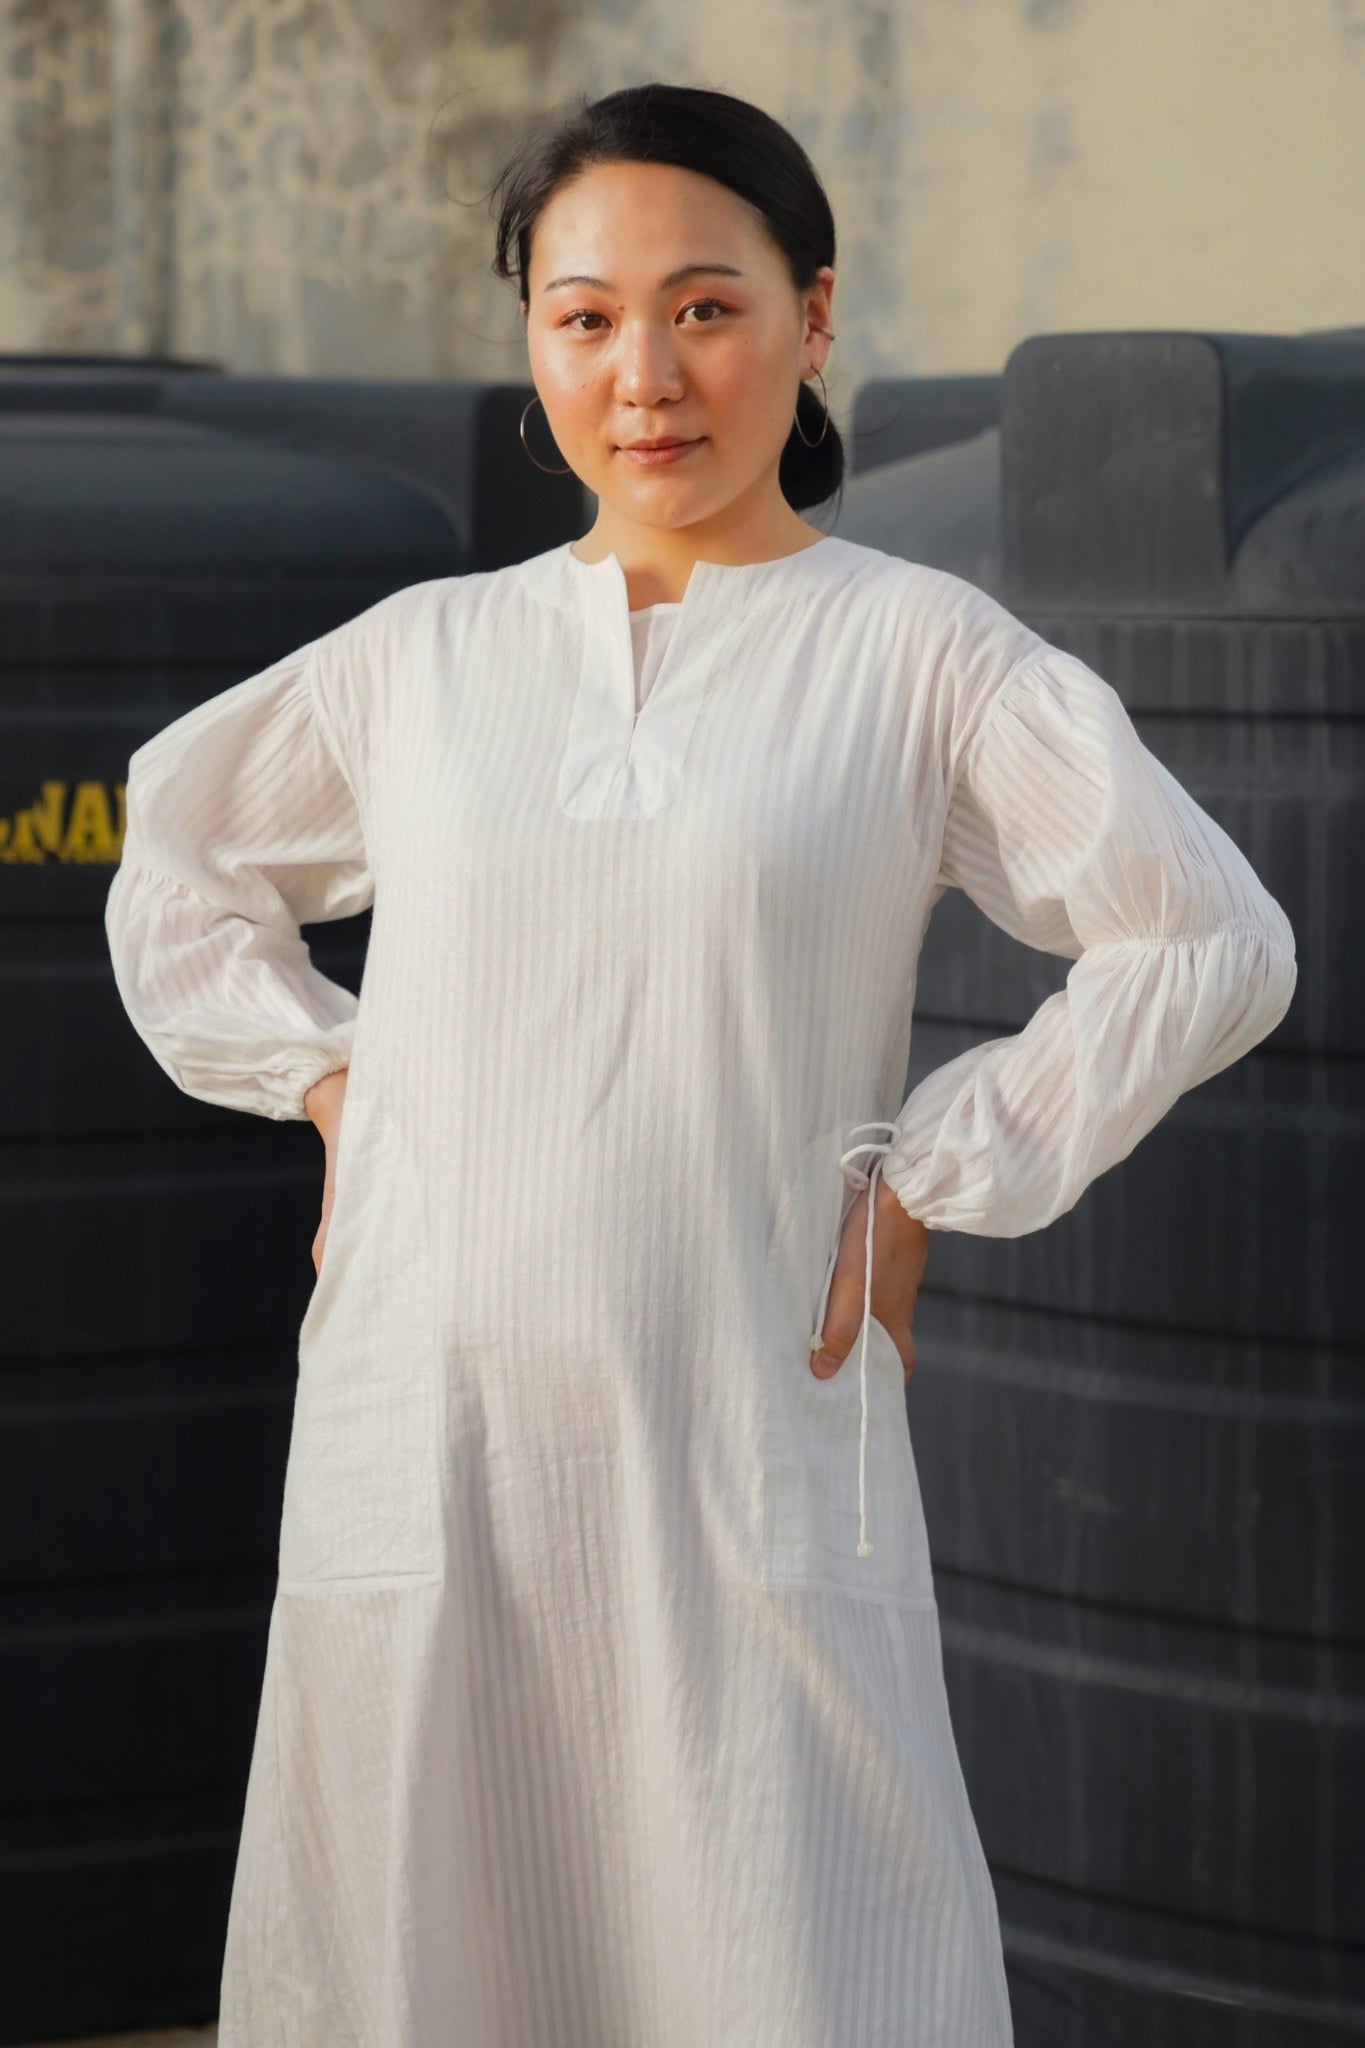 Oxford White Muslin Dress - Super soft,Nightshirt style, Self Stripe - Front